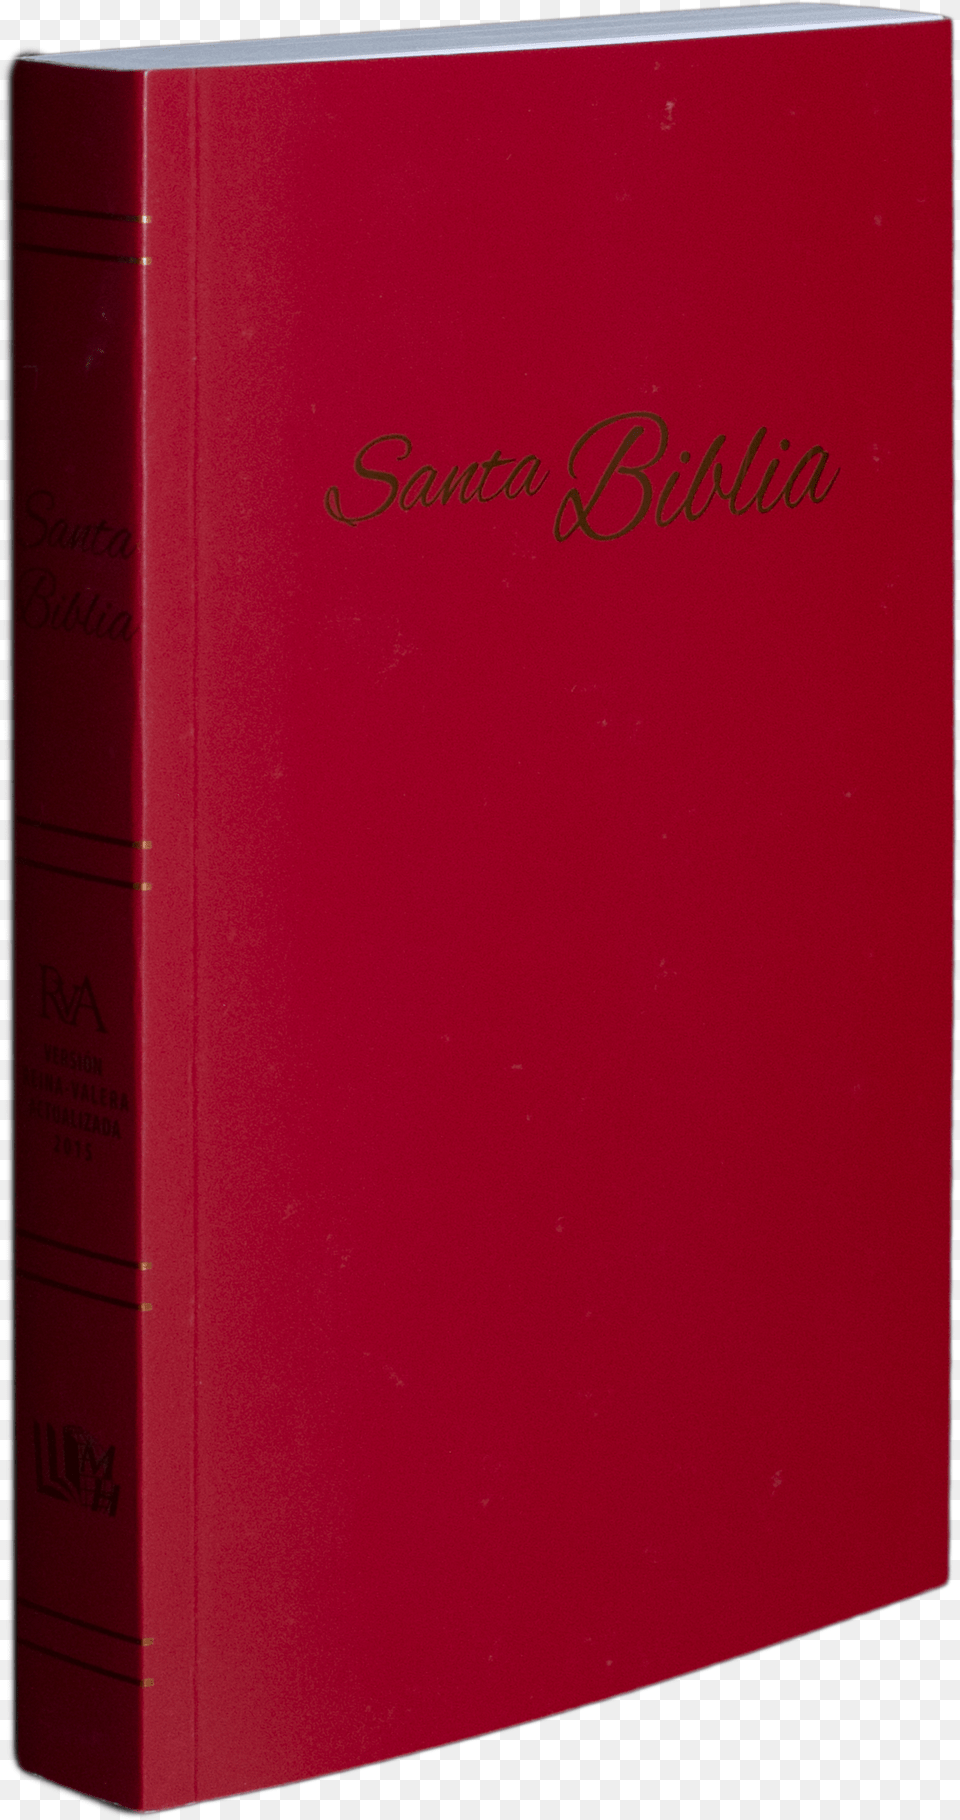 Rva 2015 Biblia Letra Grande Economica Roja, Book, Publication, File Binder Free Transparent Png